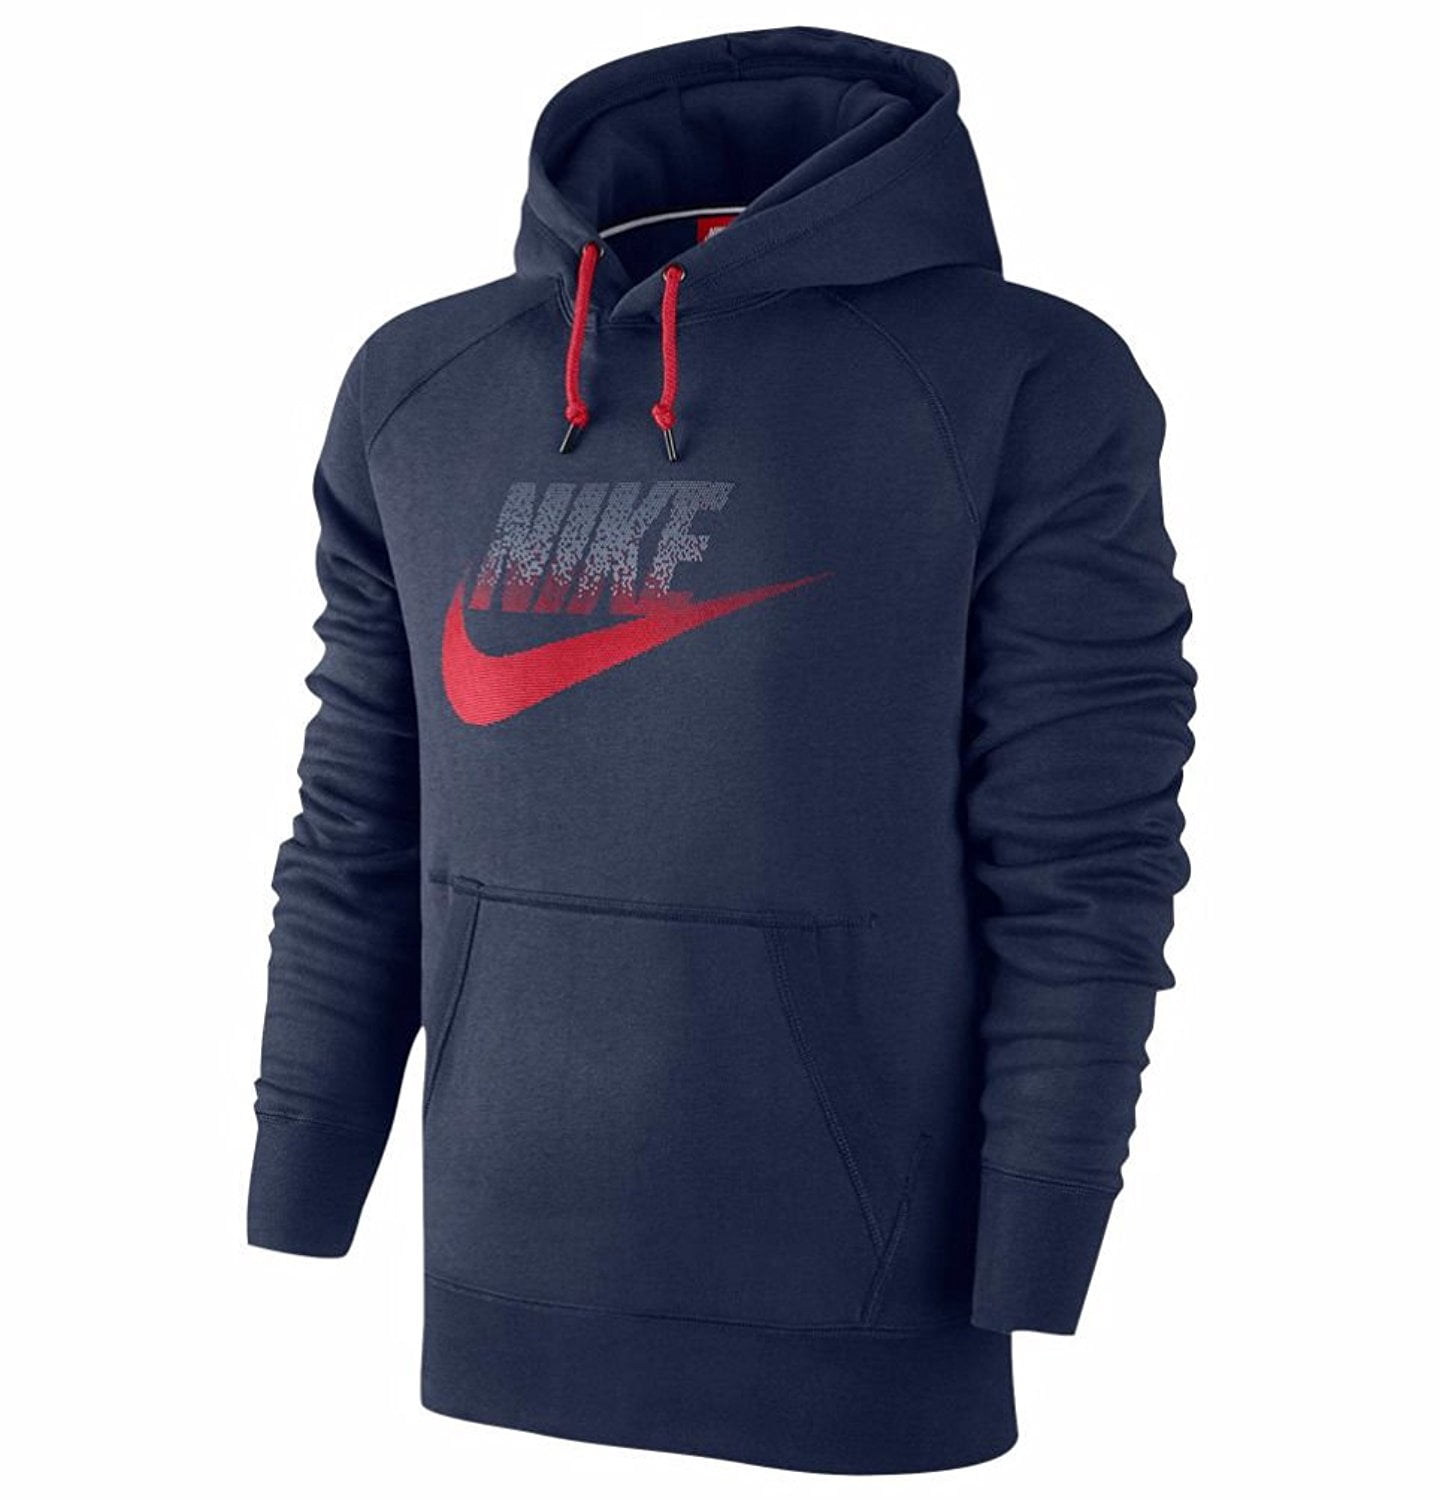 Nike Men's AW77 Futura Fleece Pullover Hoodie-Navy/Red - Walmart.com